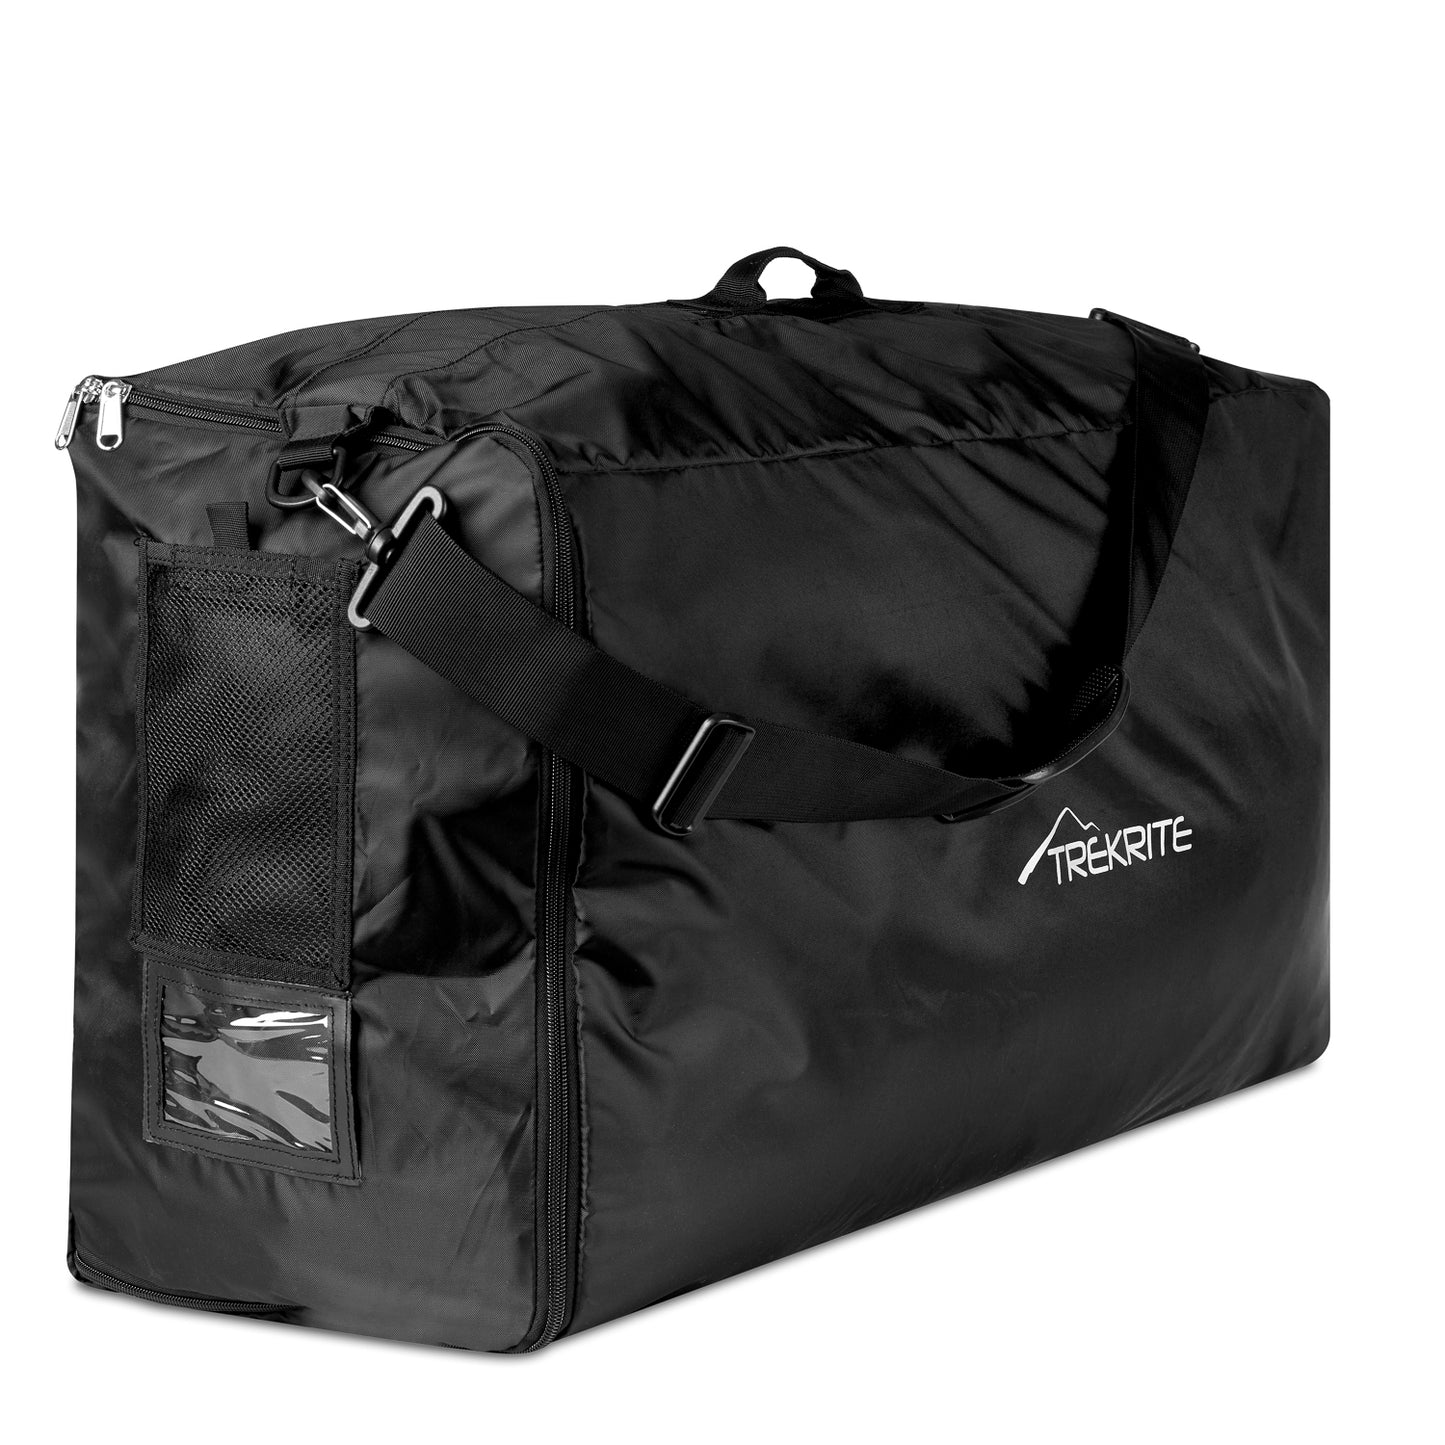 Waterproof Rucksack/ Backpack Transit Cover